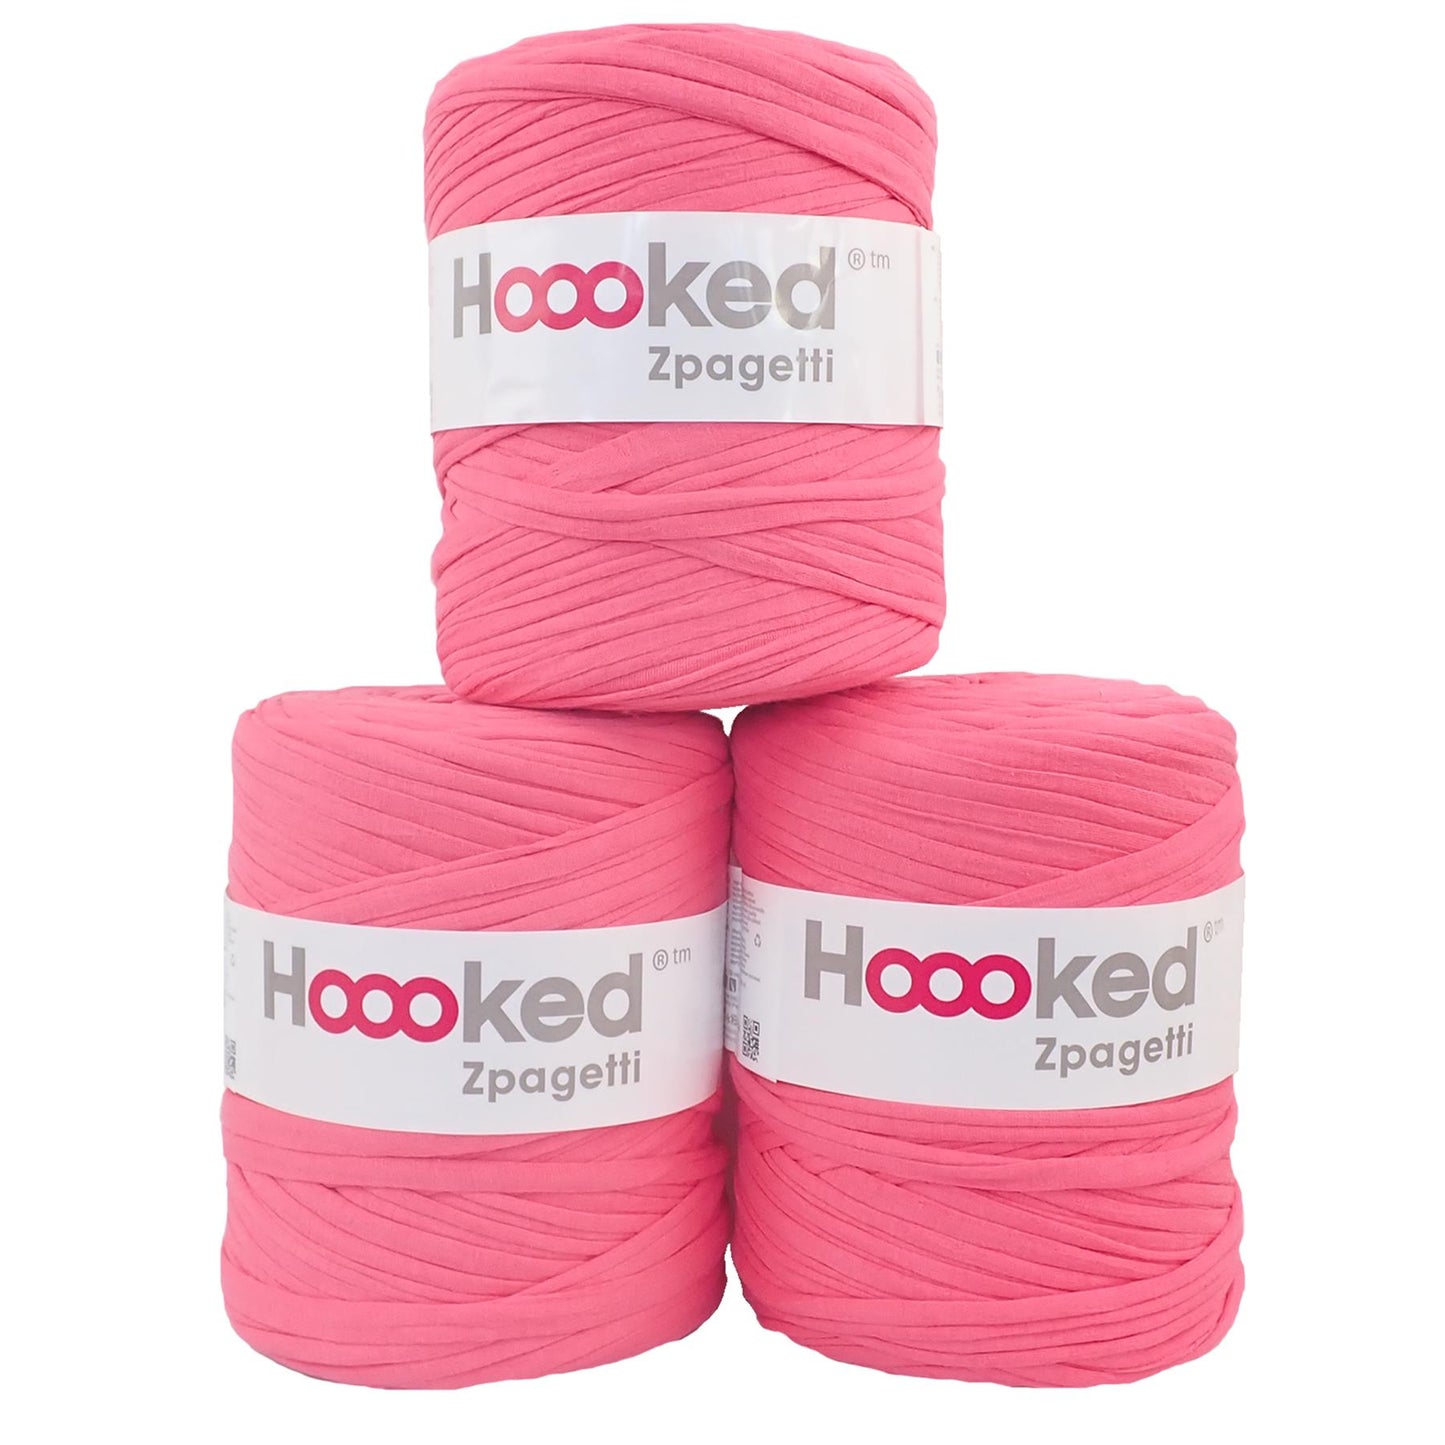 Hoooked Zpagetti Dark Pink Cotton T-Shirt Yarn - 120M 700g (Pack of 3)